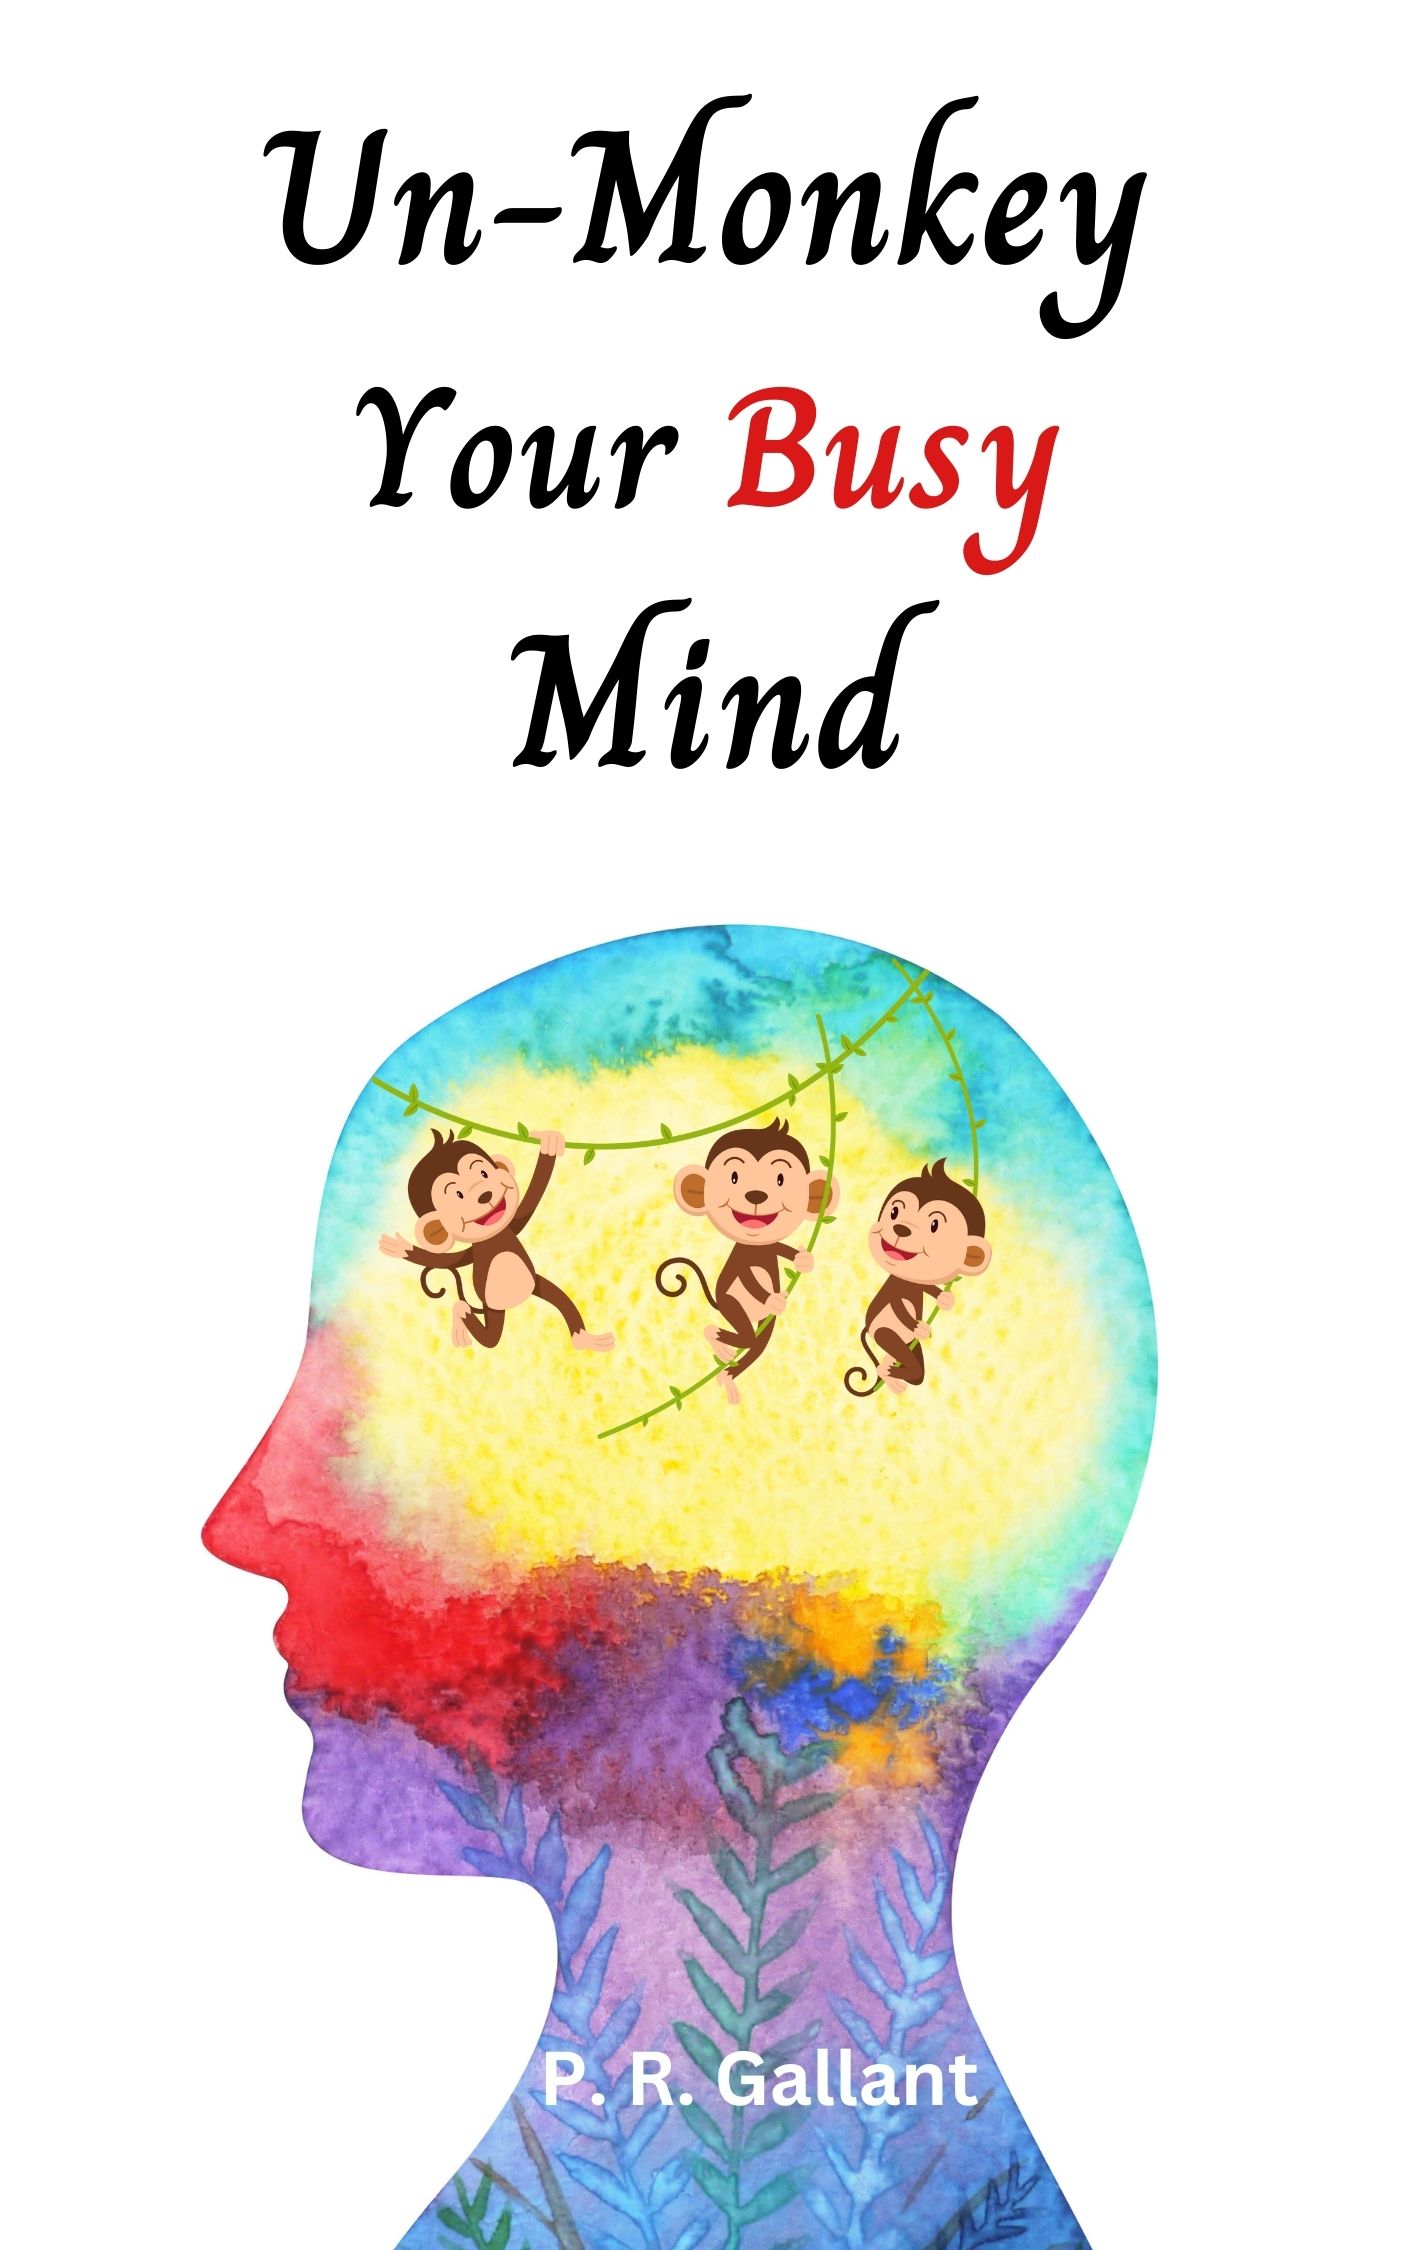 un-monkey your busy mind ebook